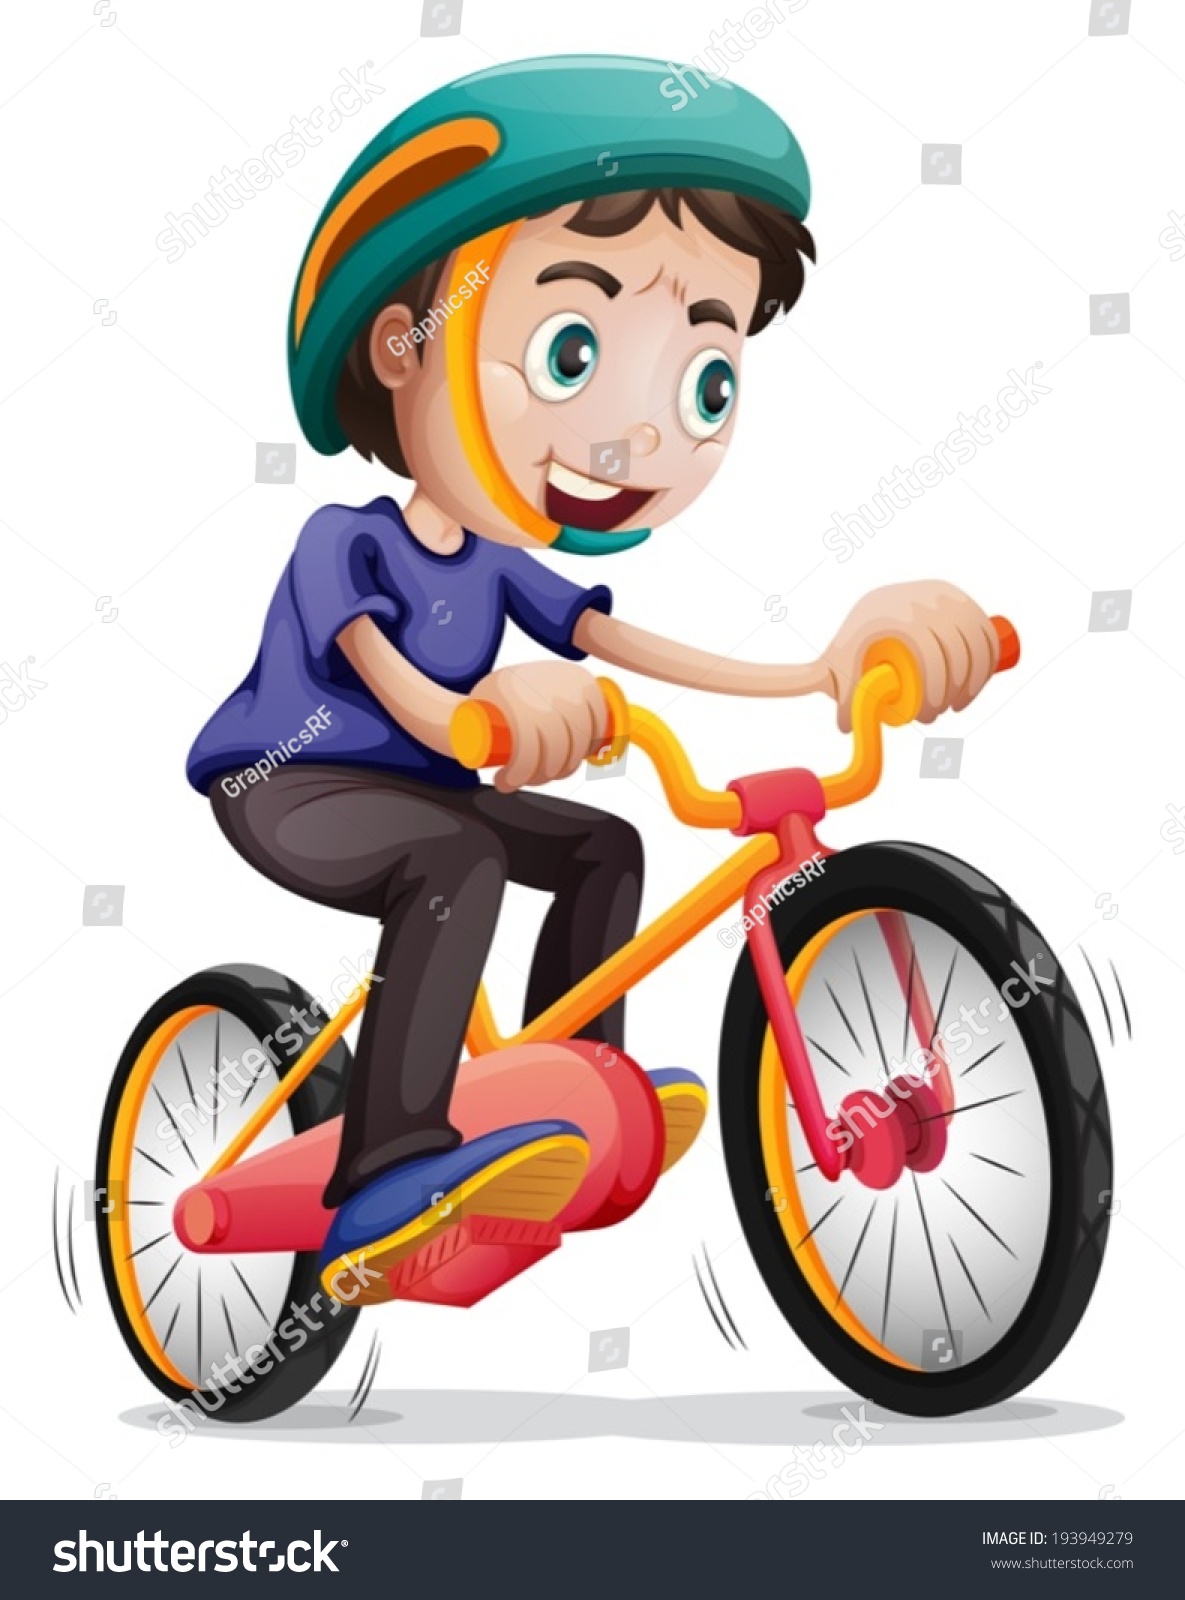 boy riding a bike clipart - photo #13